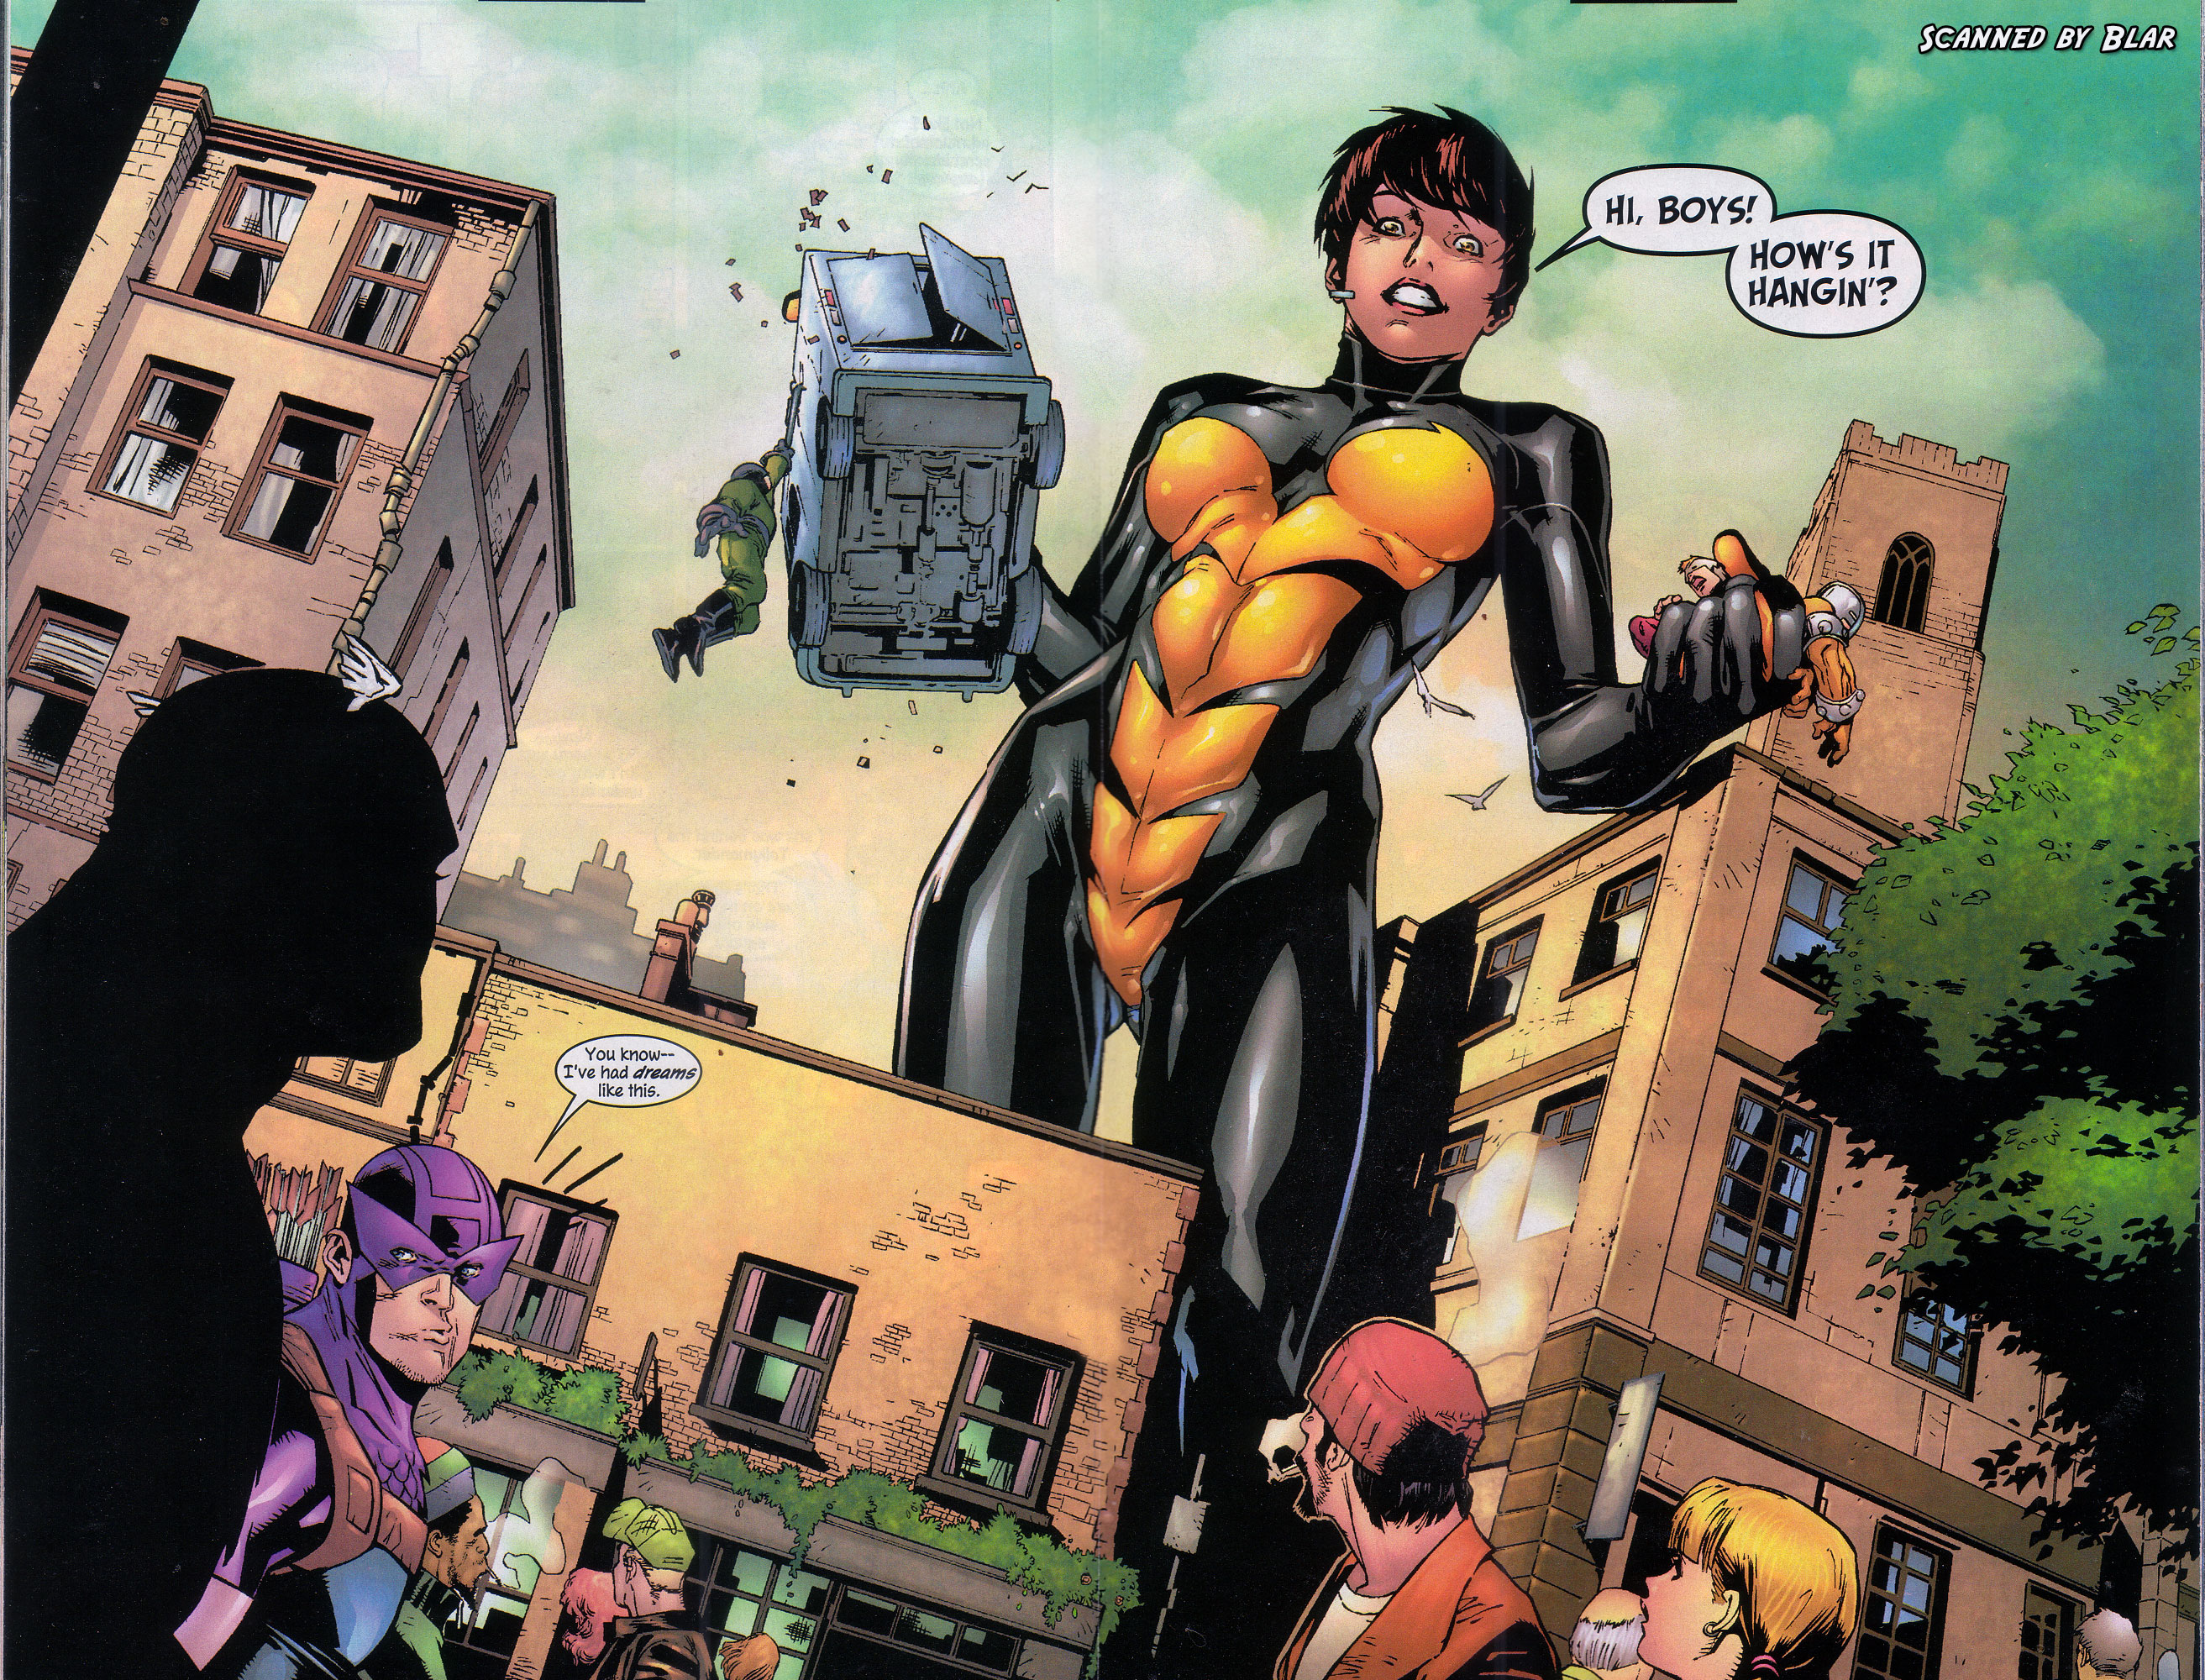 General 2625x2000 giantess Marvel Comics The Wasp Hawkeye Captain America The Avengers digital art watermarked